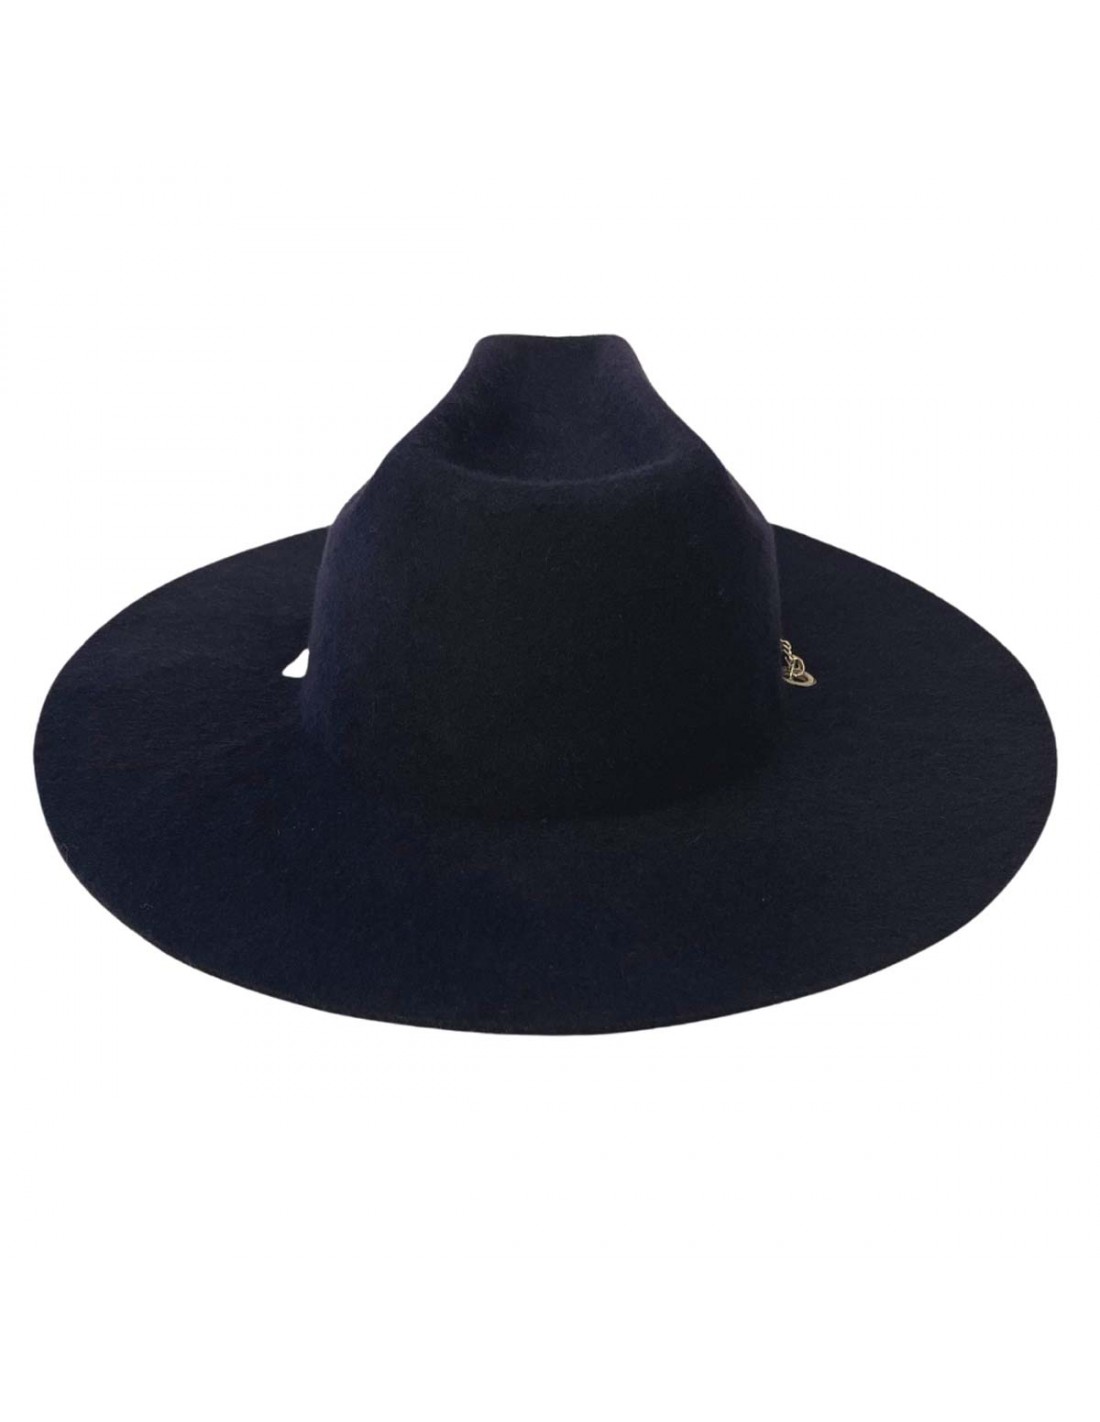 Sombrero Cowboy Mujer Azul Marino Cadena Plateada Aspen